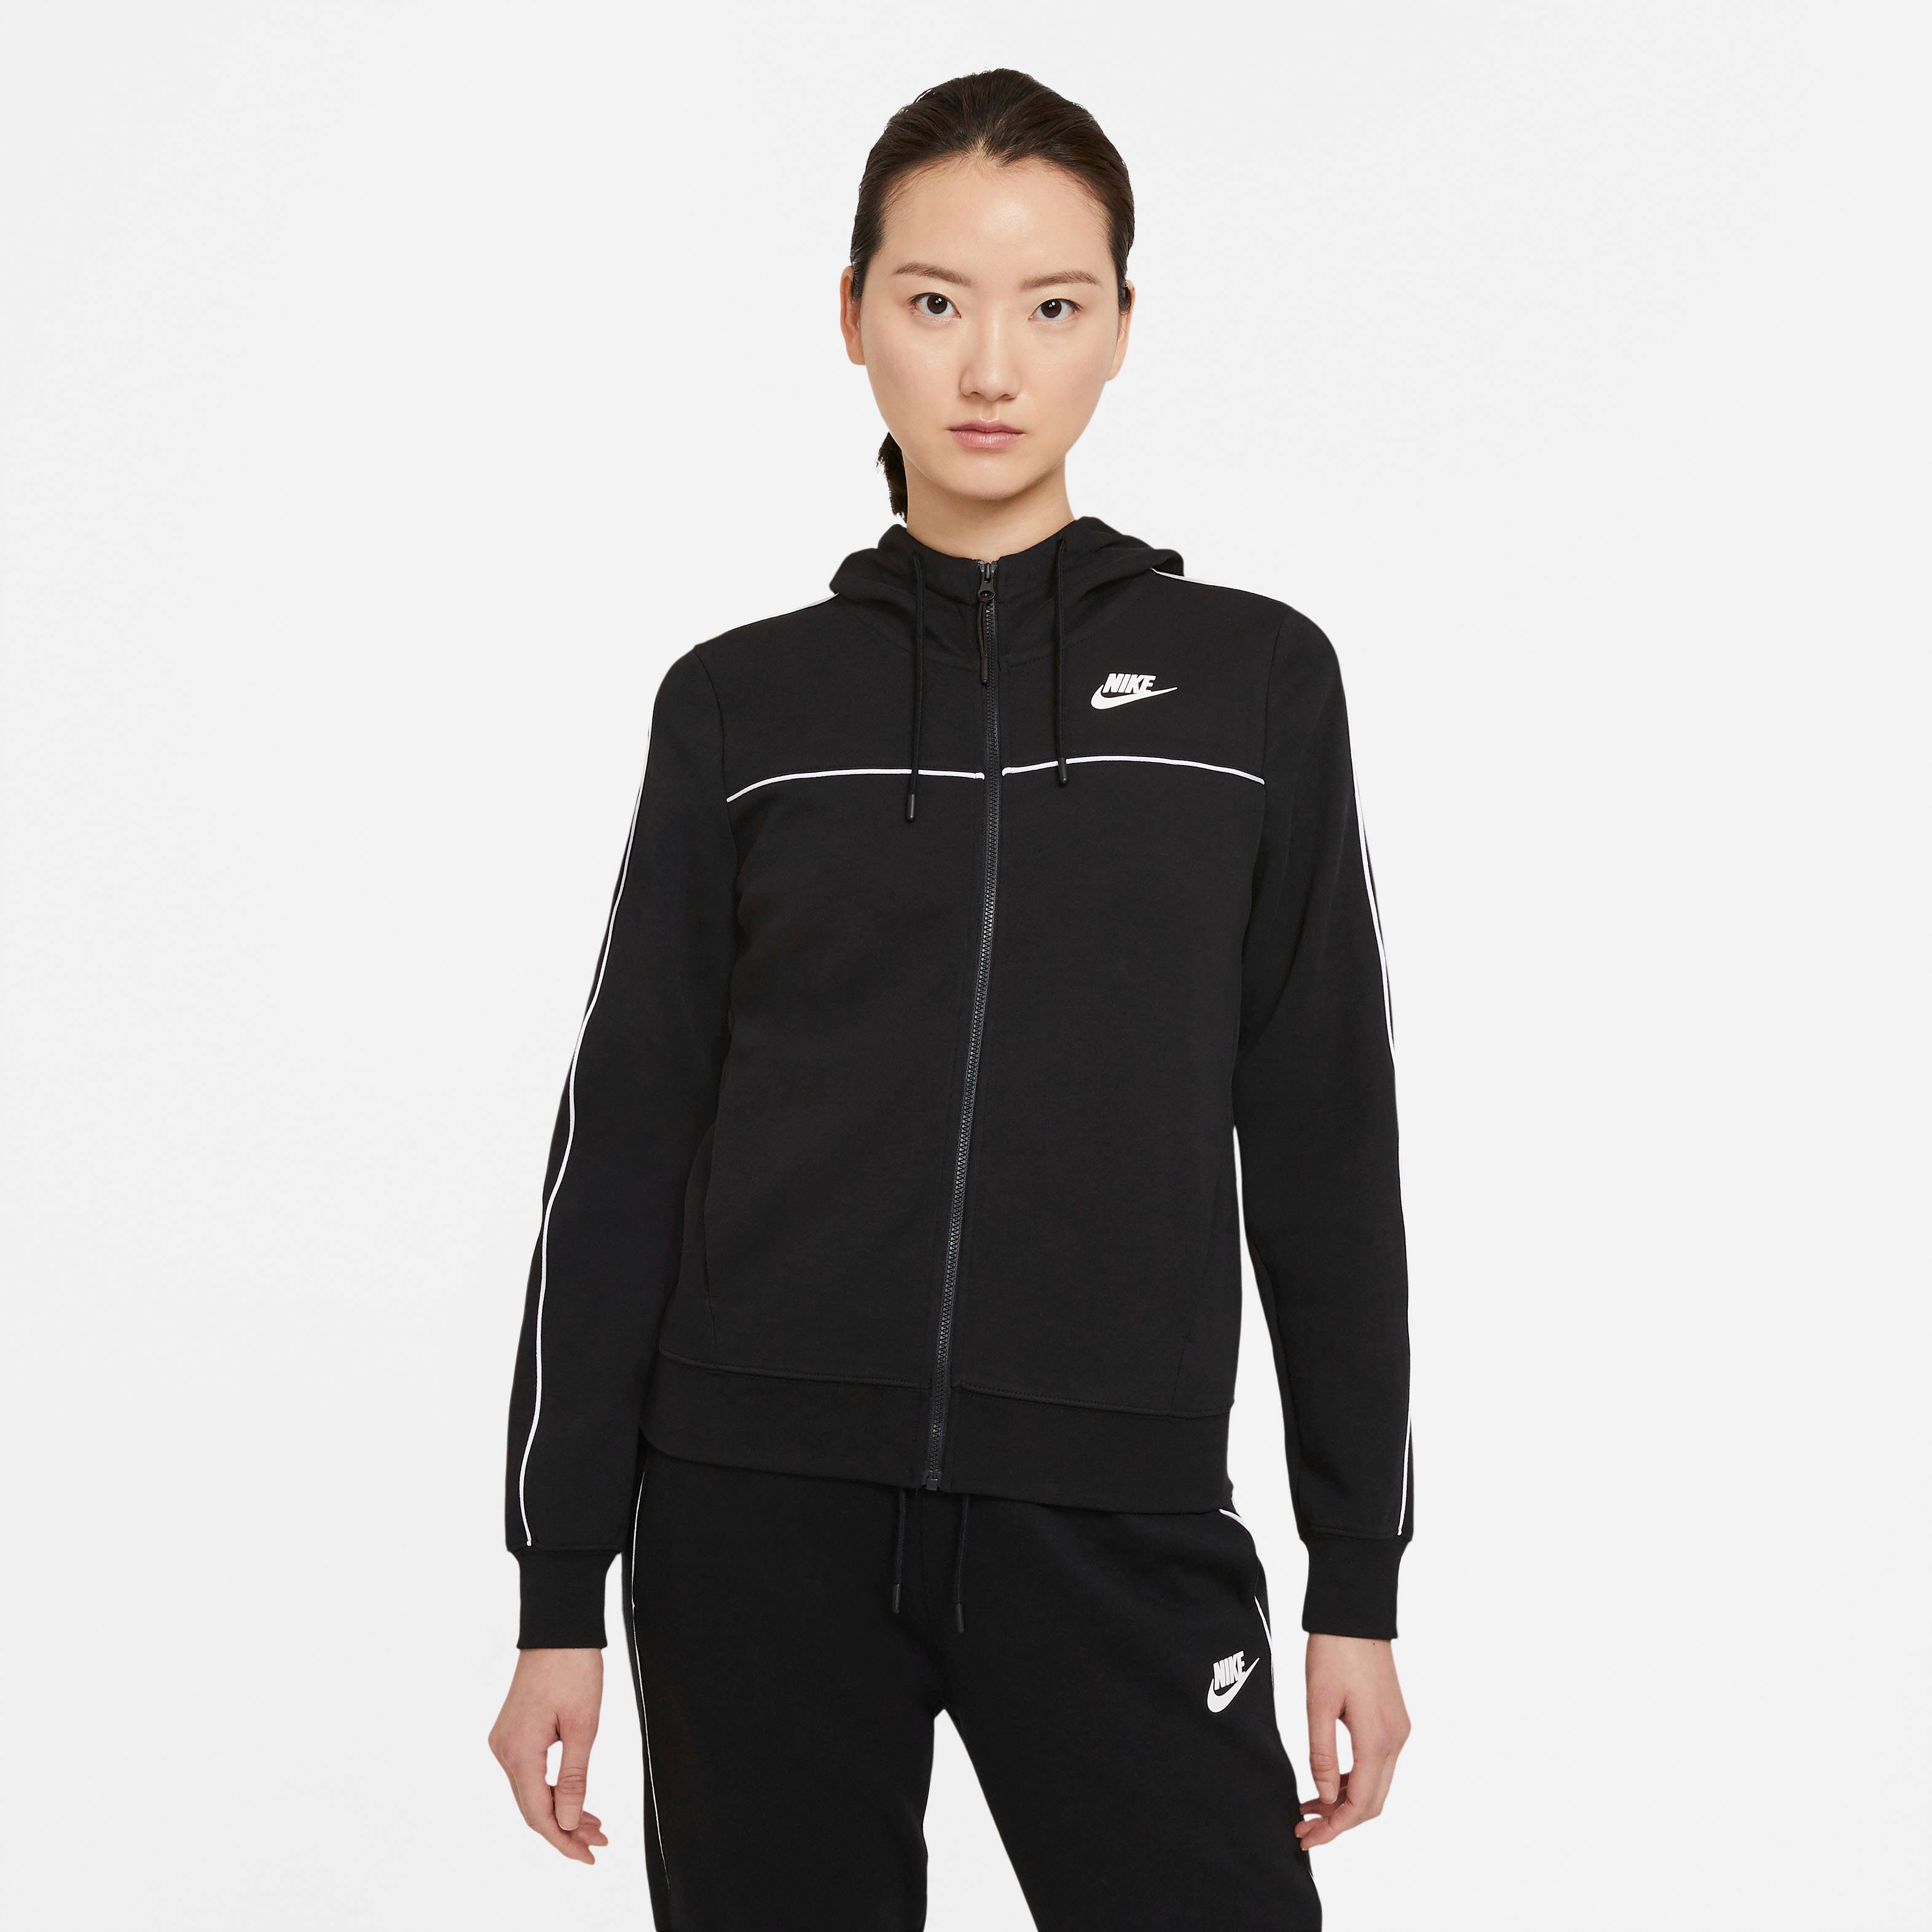 Nike Jacke online kaufen | OTTO